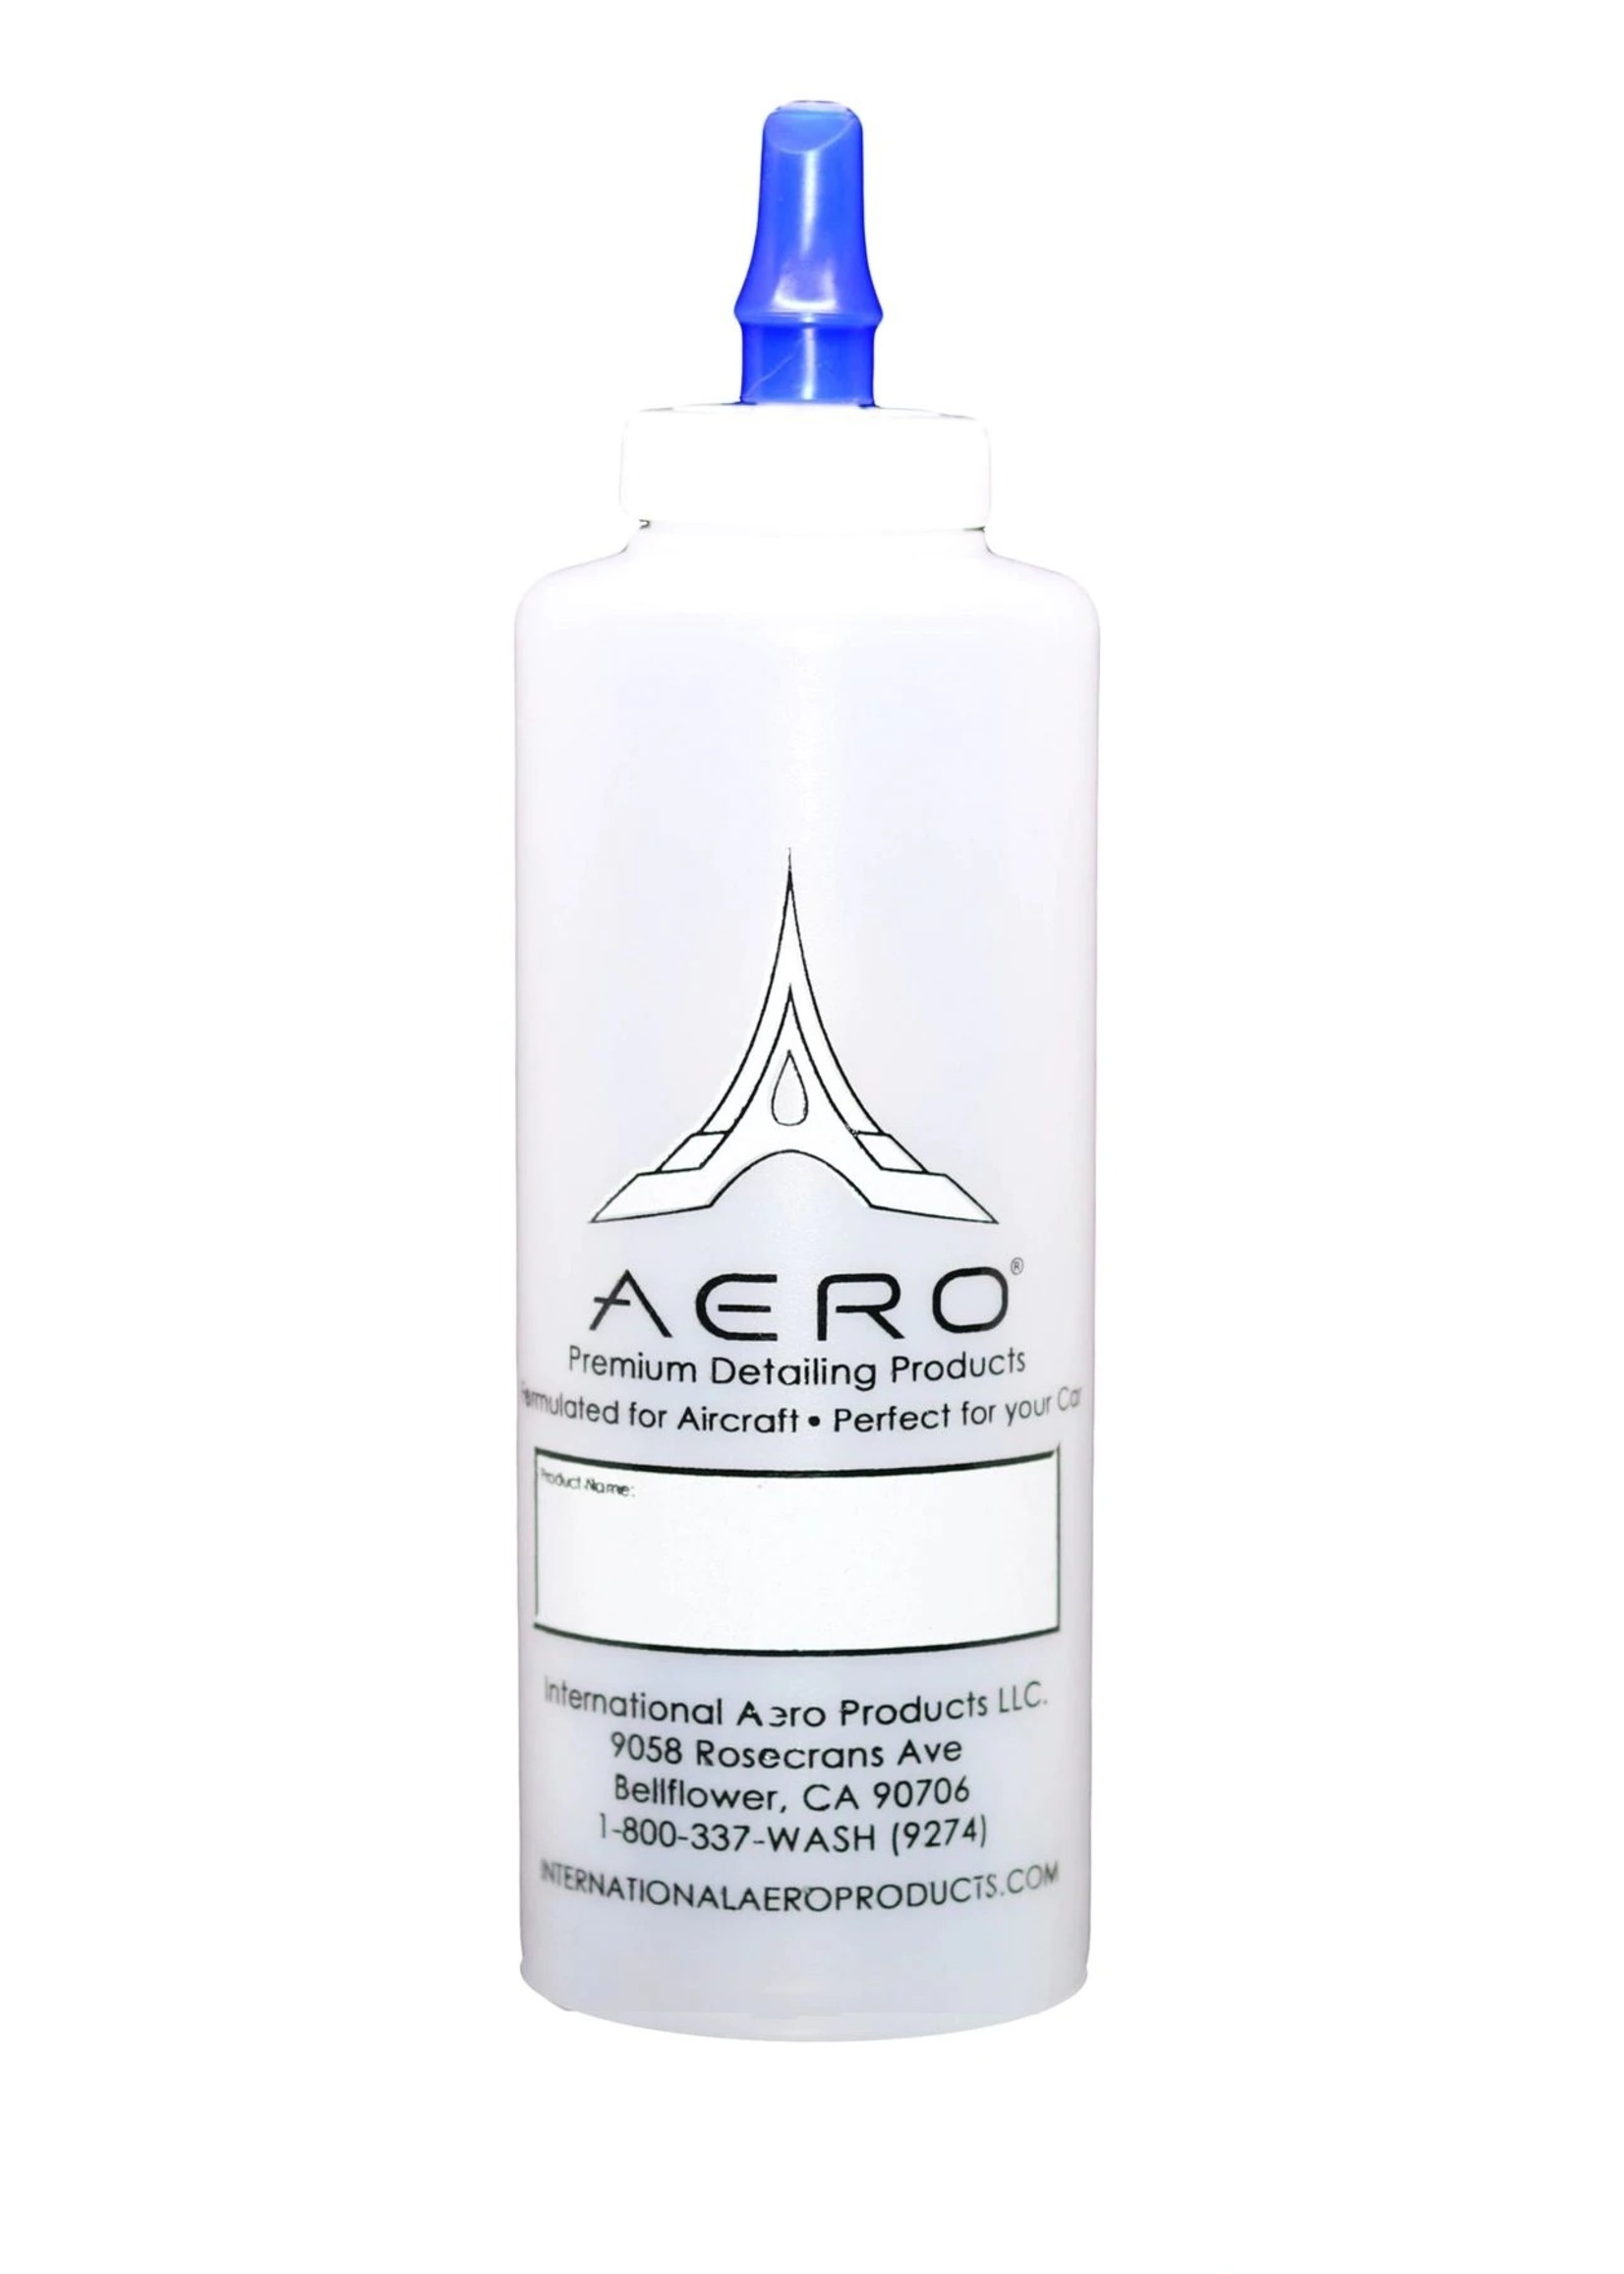 Aero Detail Products REVOLUTION Applicator Bottle